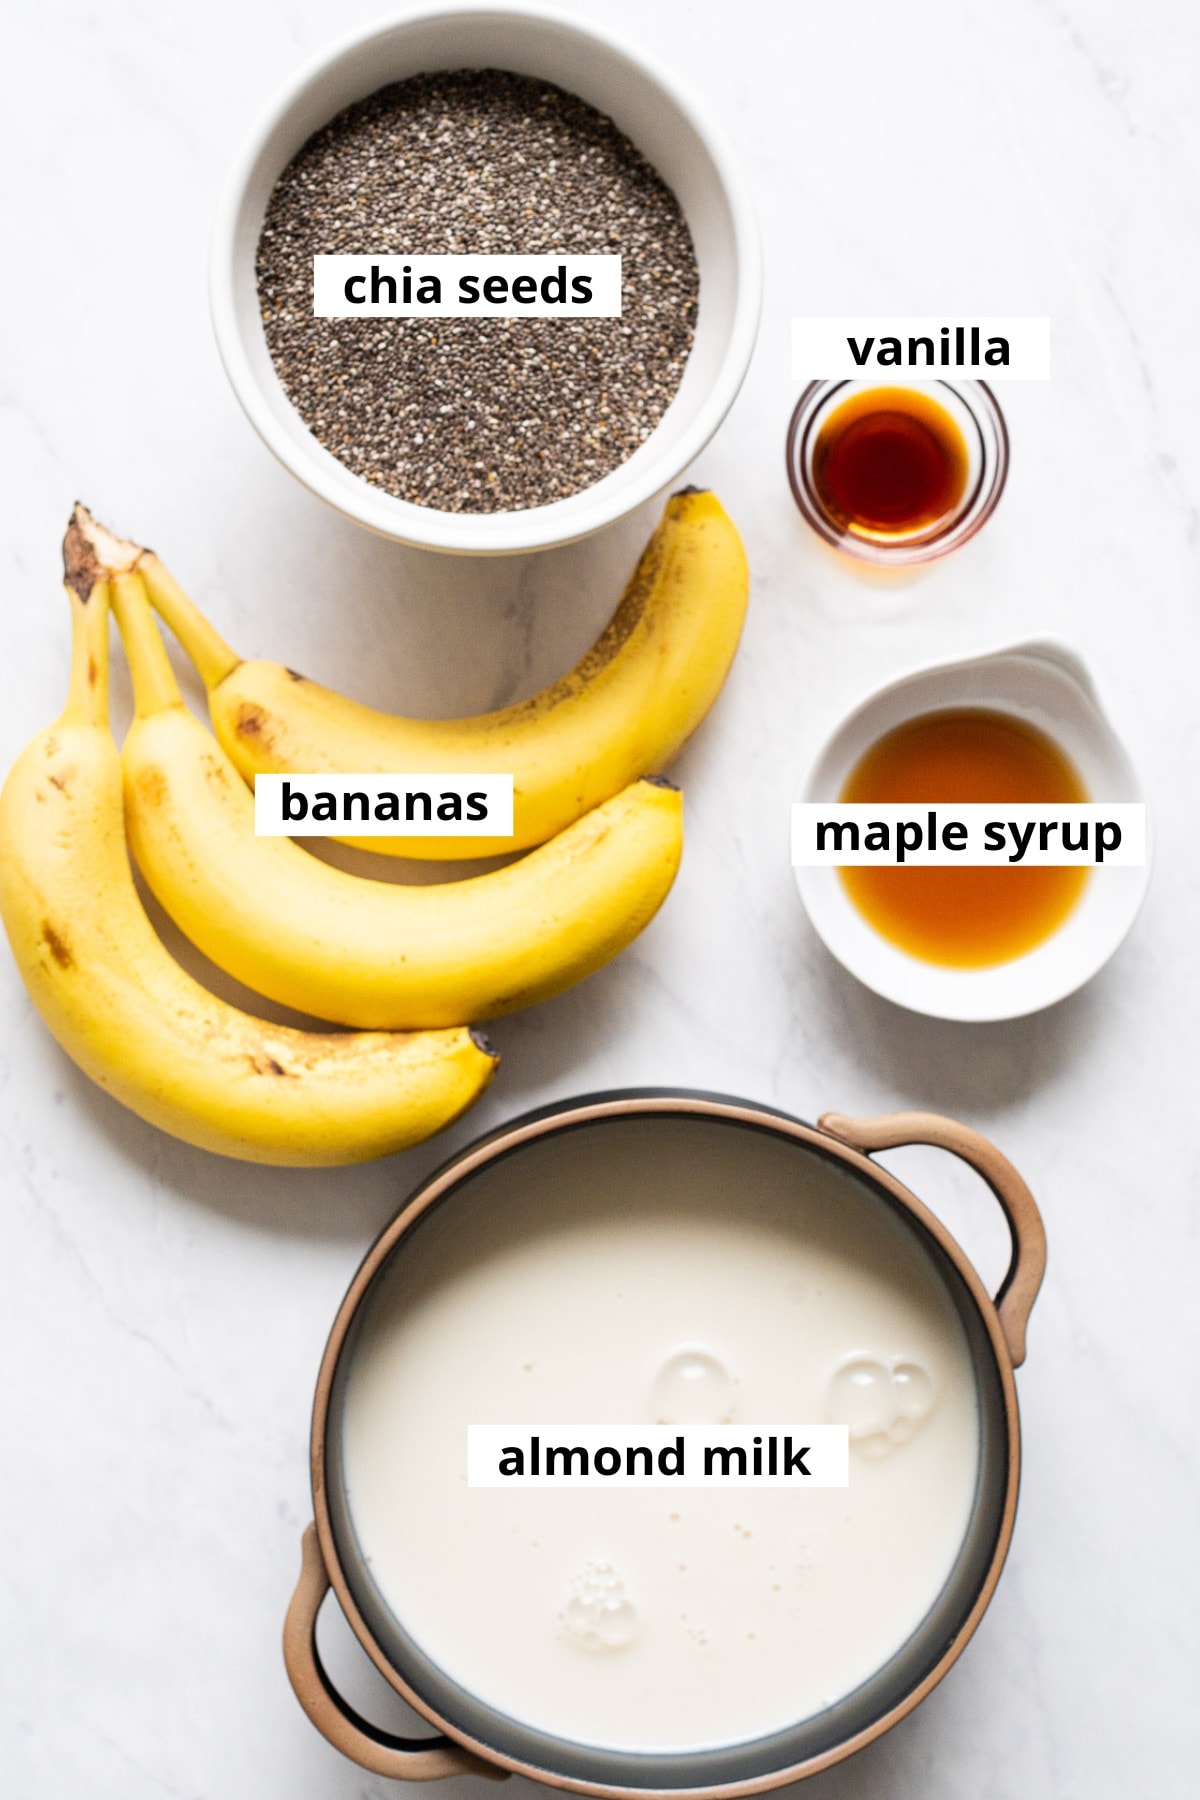 Chia seeds, bananas, maple syrup, vanilla extract, almond milk.